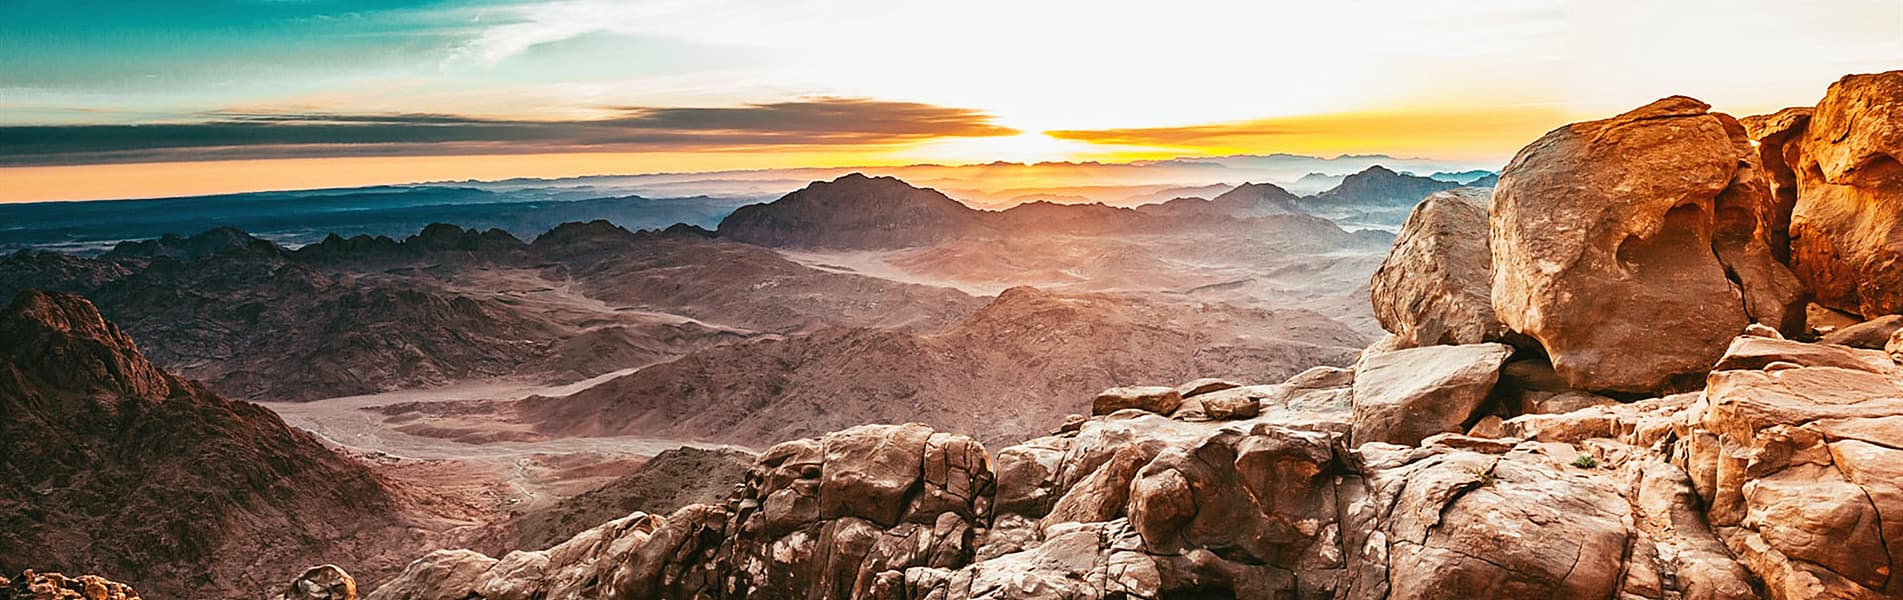 Sunrise over Mount Sinai